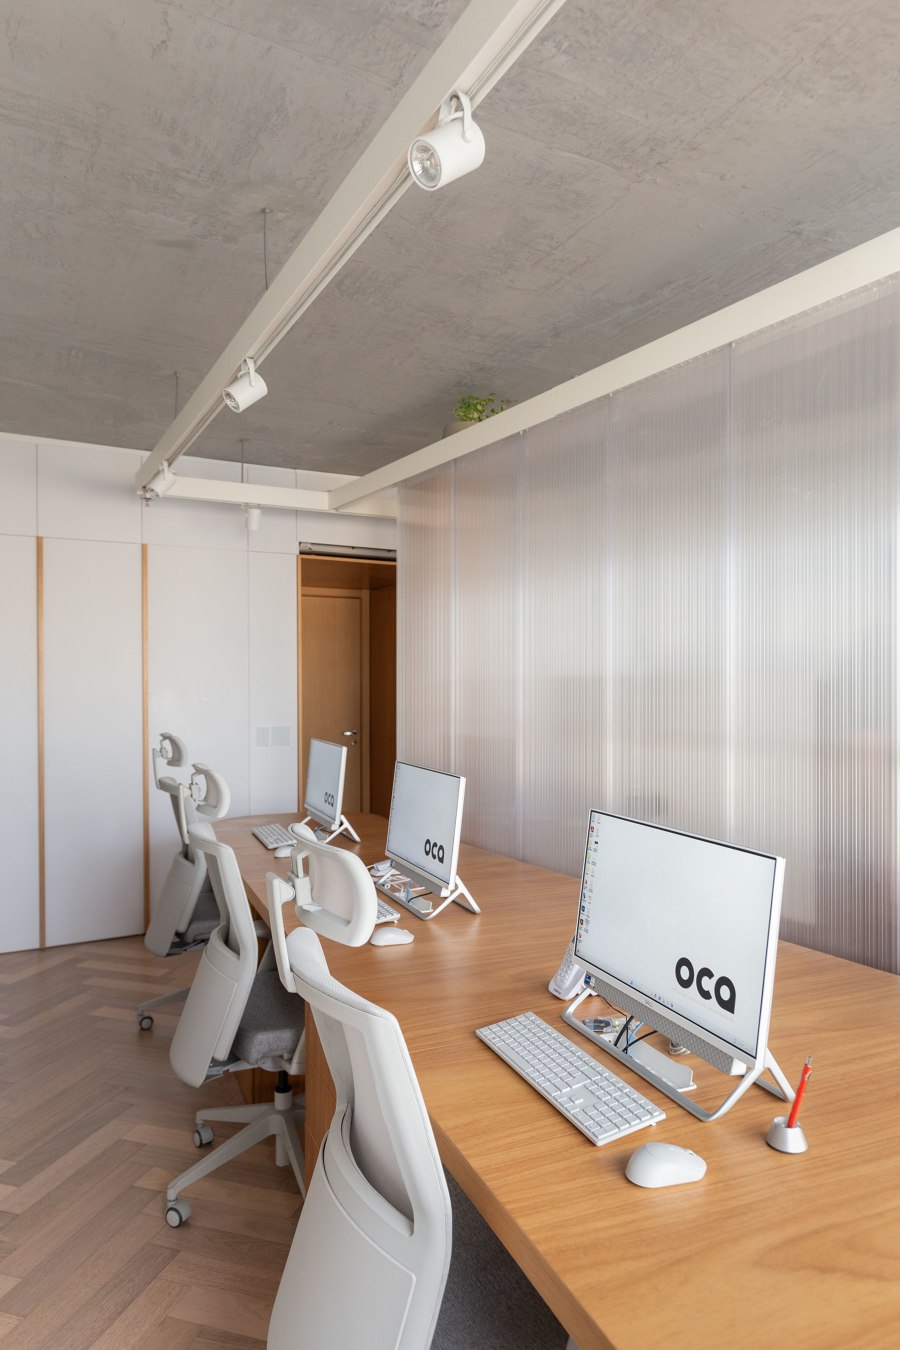 OCA Office Headquarters 03 by Oficina Conceito Arquitetura | Office facilities